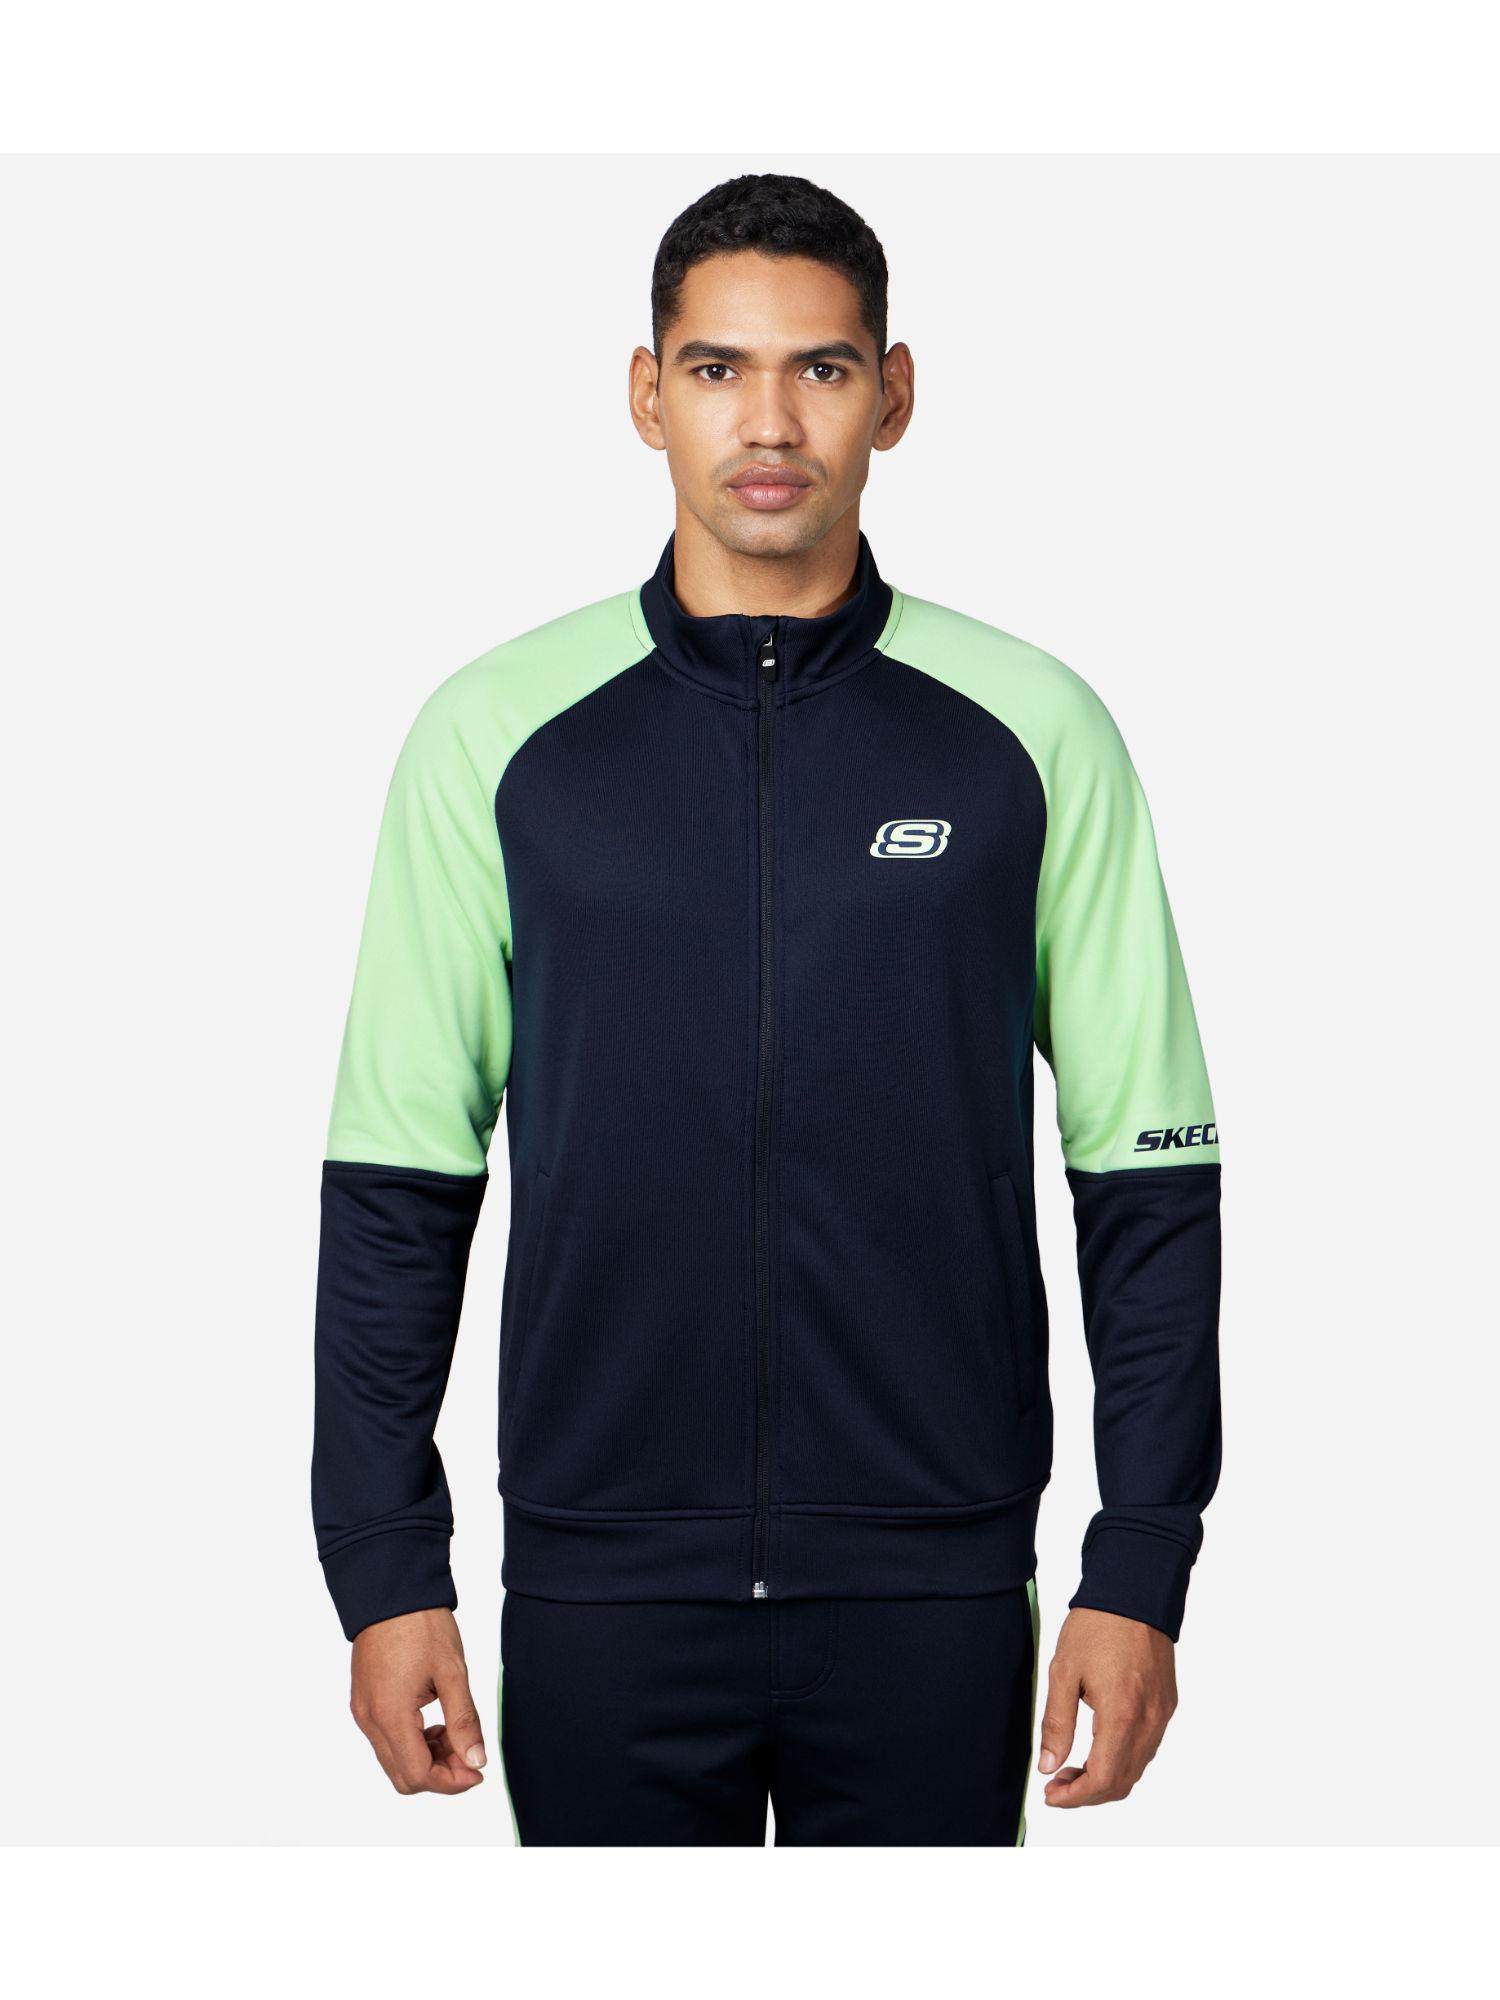 tech fz jacket navy blue & green